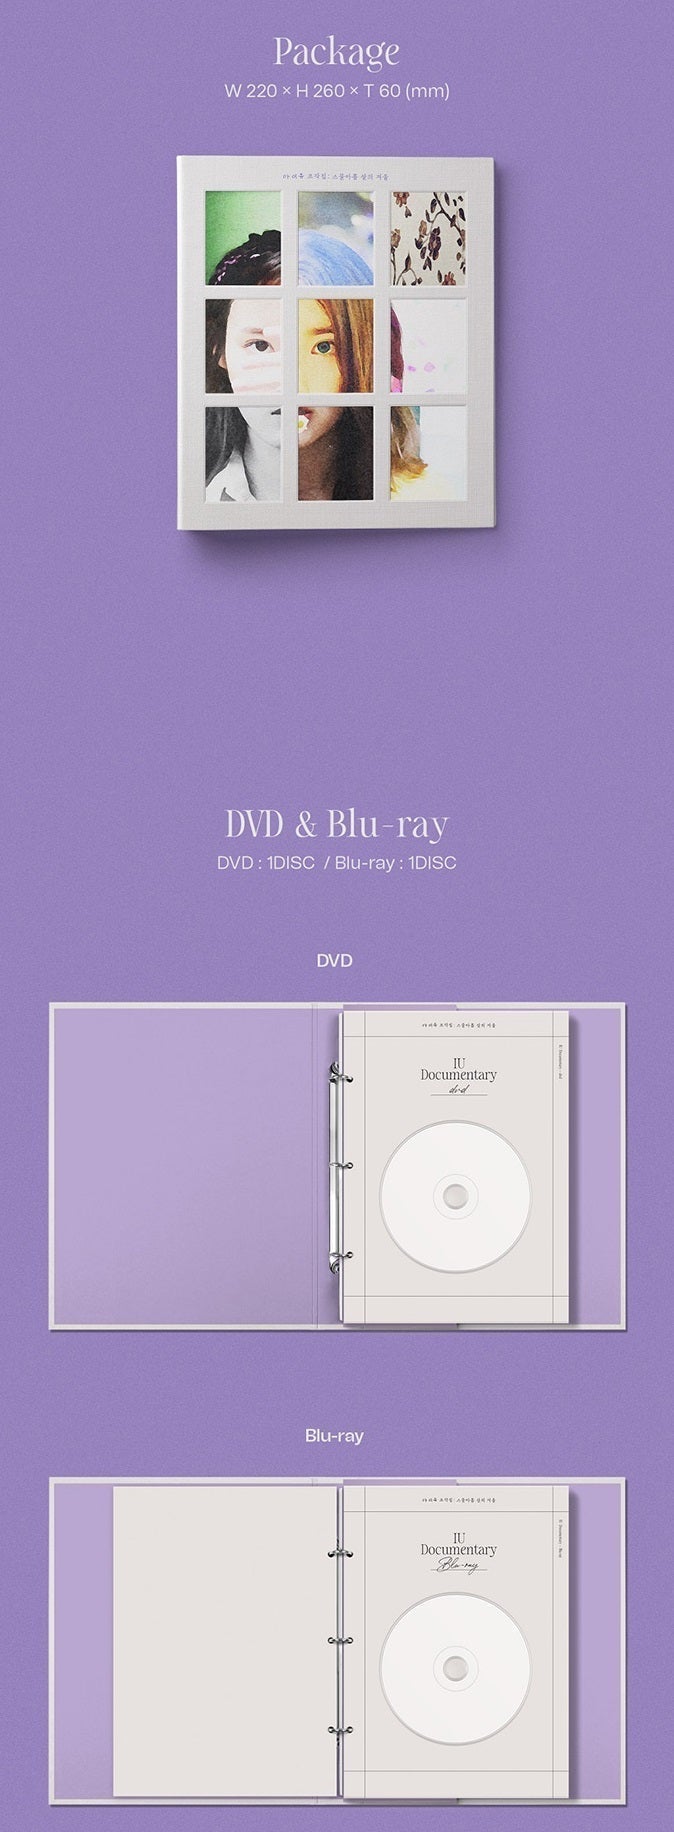 [PREORDER] IU - DOCUMENTARY (DVD+BLU RAY+CD)